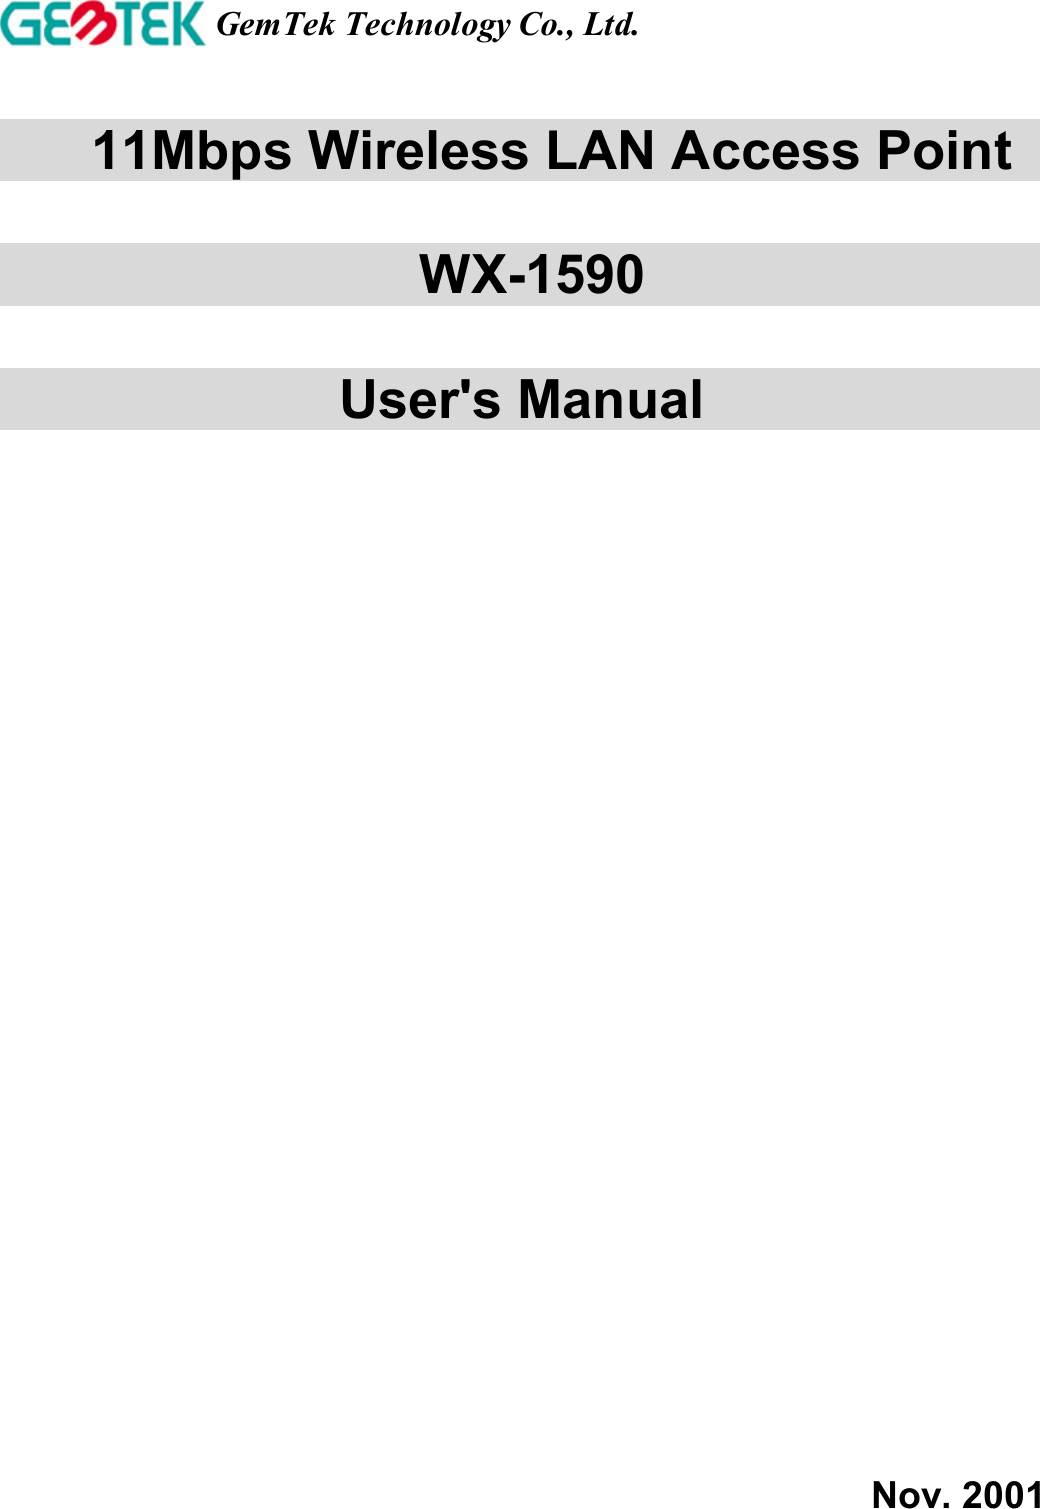         11Mbps Wireless LAN Access Point                               WX-1590   User&apos;s Manual                    Nov. 2001 GemTek Technology Co., Ltd.